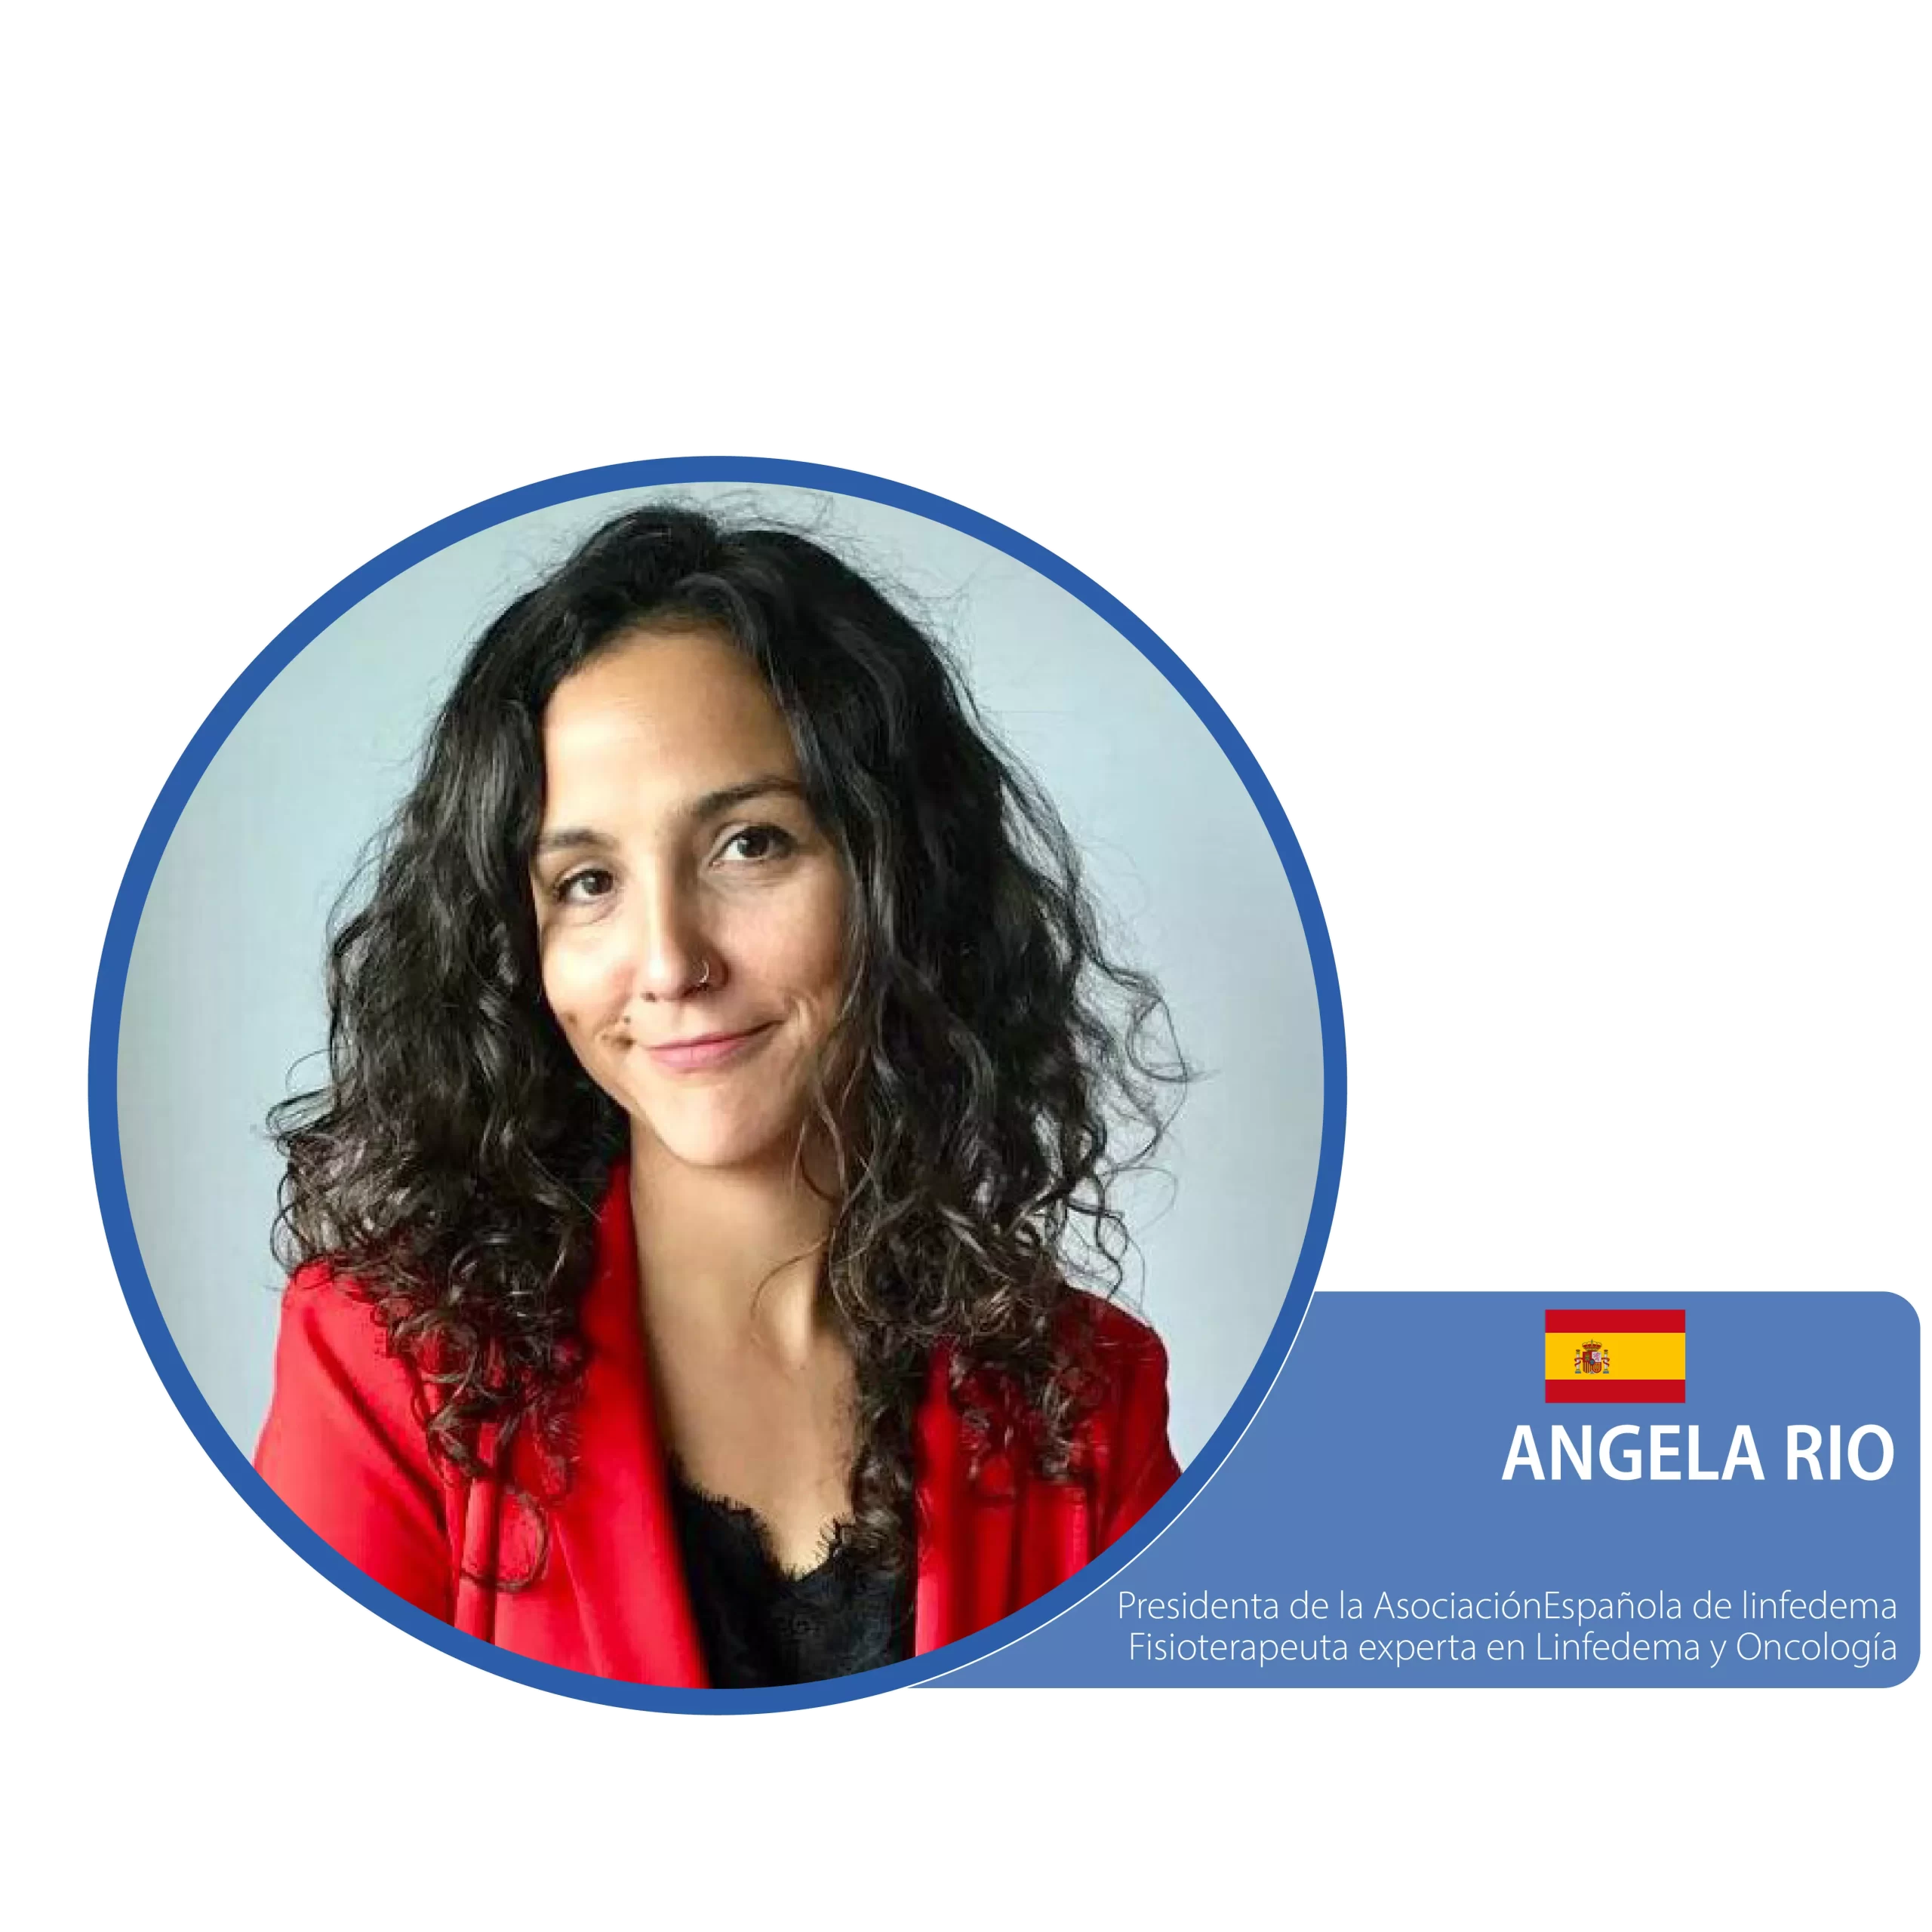 Angela Rio